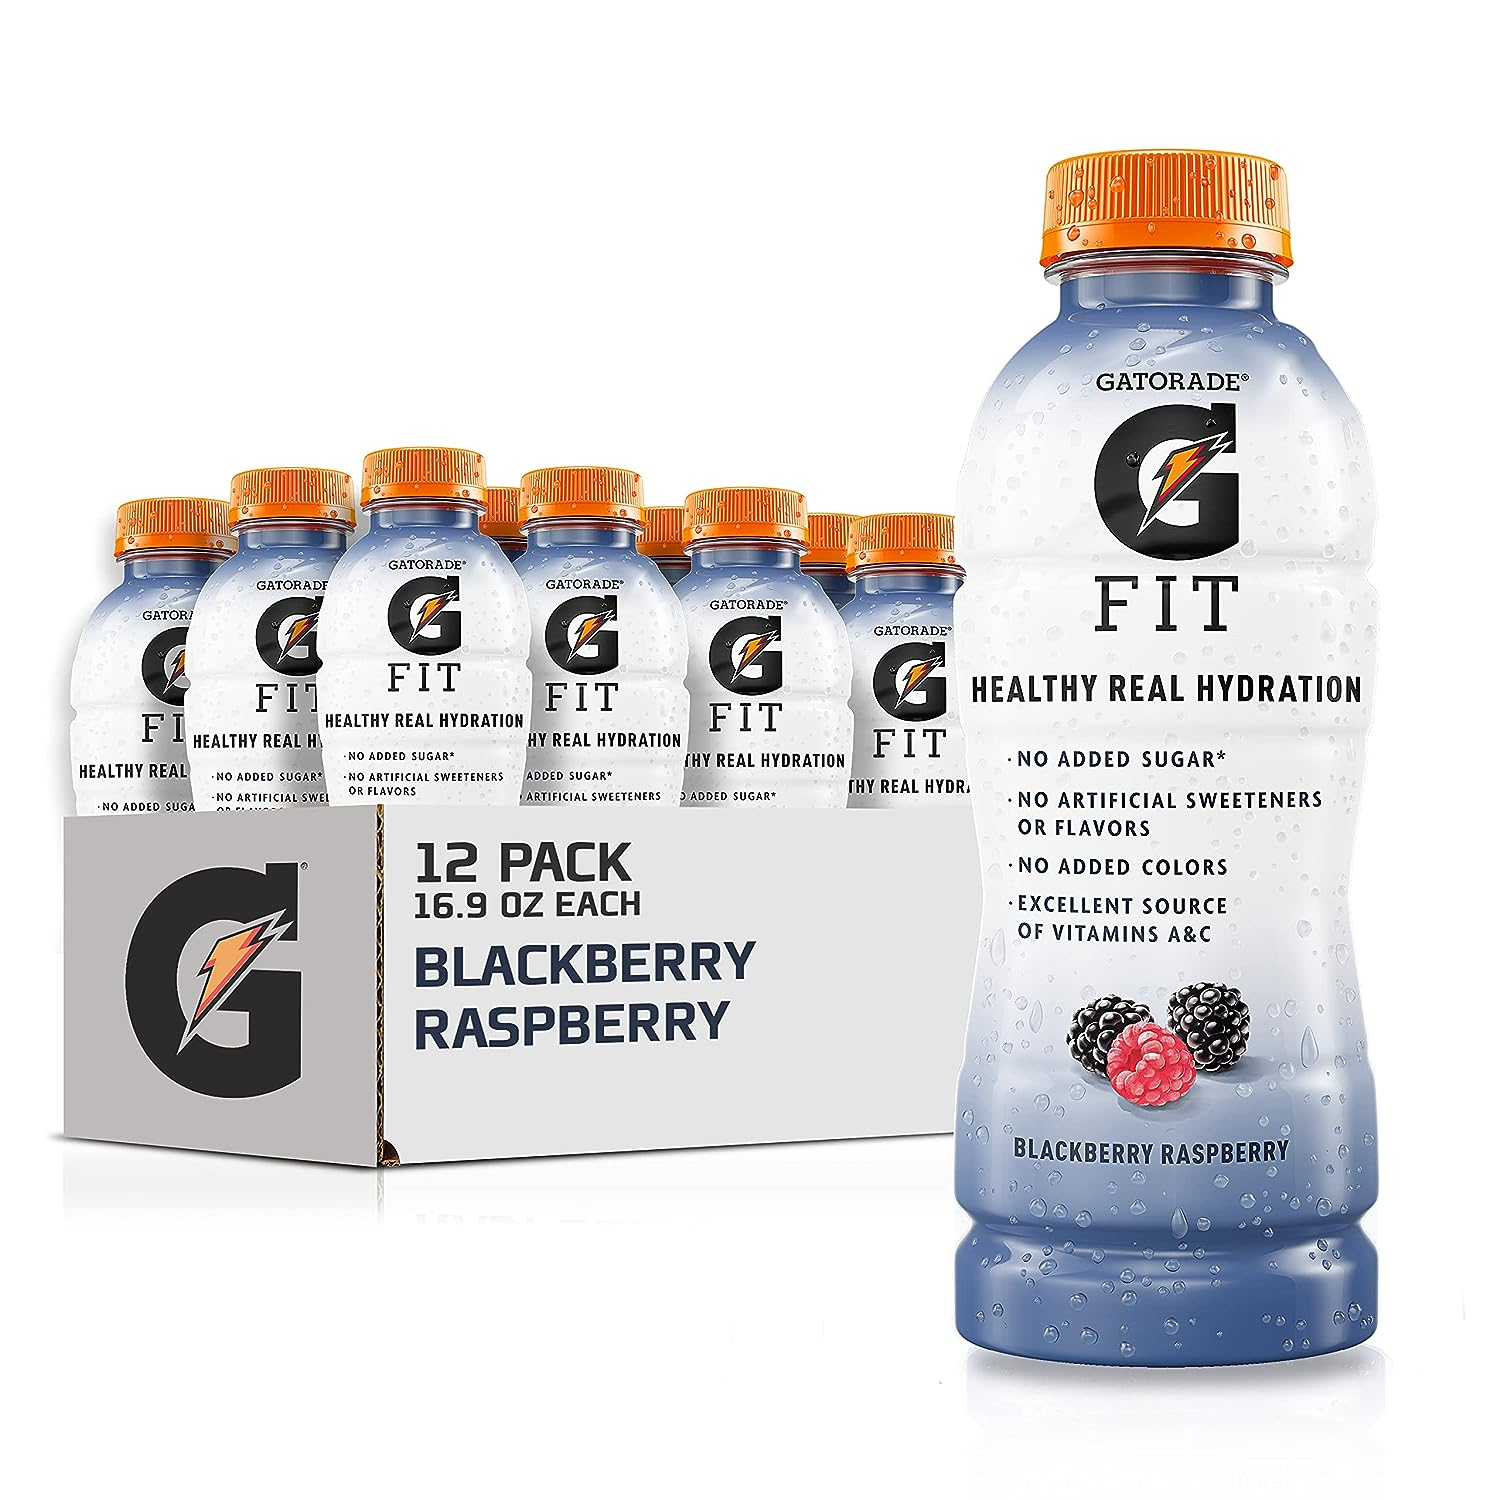 Gatorade Fit Electrolyte Beverage, Healthy Real Hydration, Blackberry Raspberry, 16.9.oz Bottles (12 Pack) -- $11.31 or lower